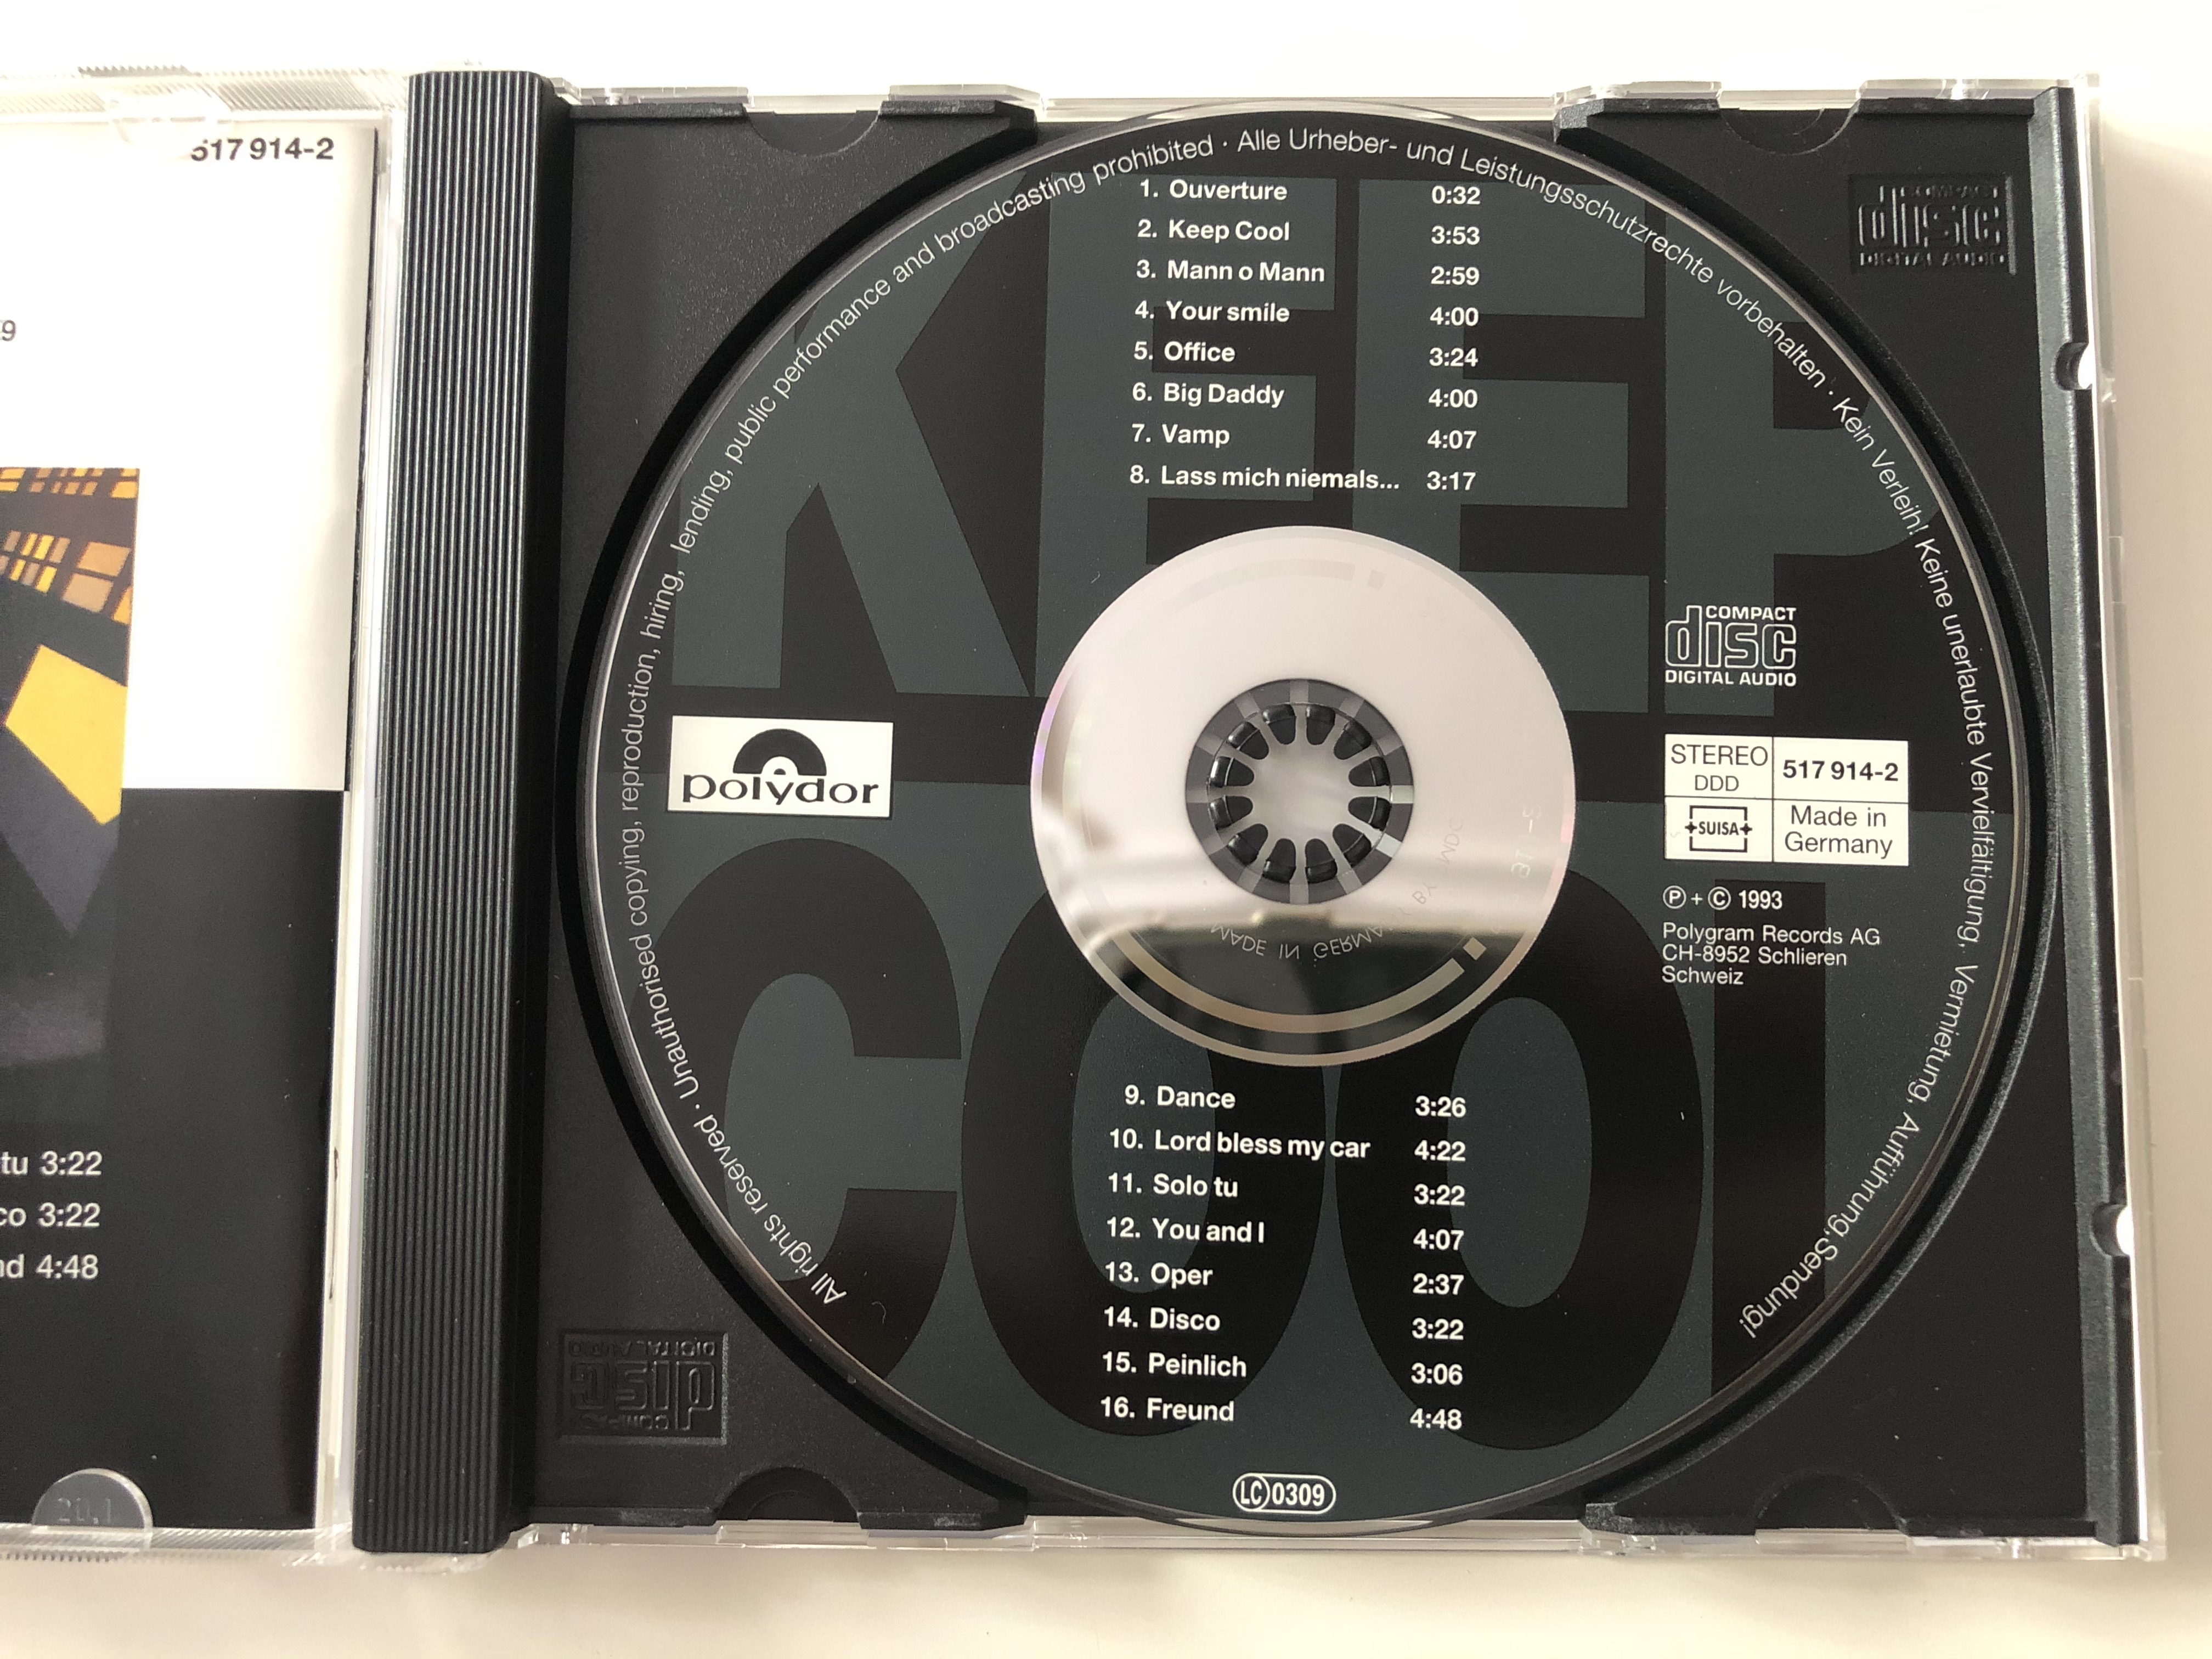 keep-cool-polydor-audio-cd-1993-stereo-517-914-2-8-.jpg